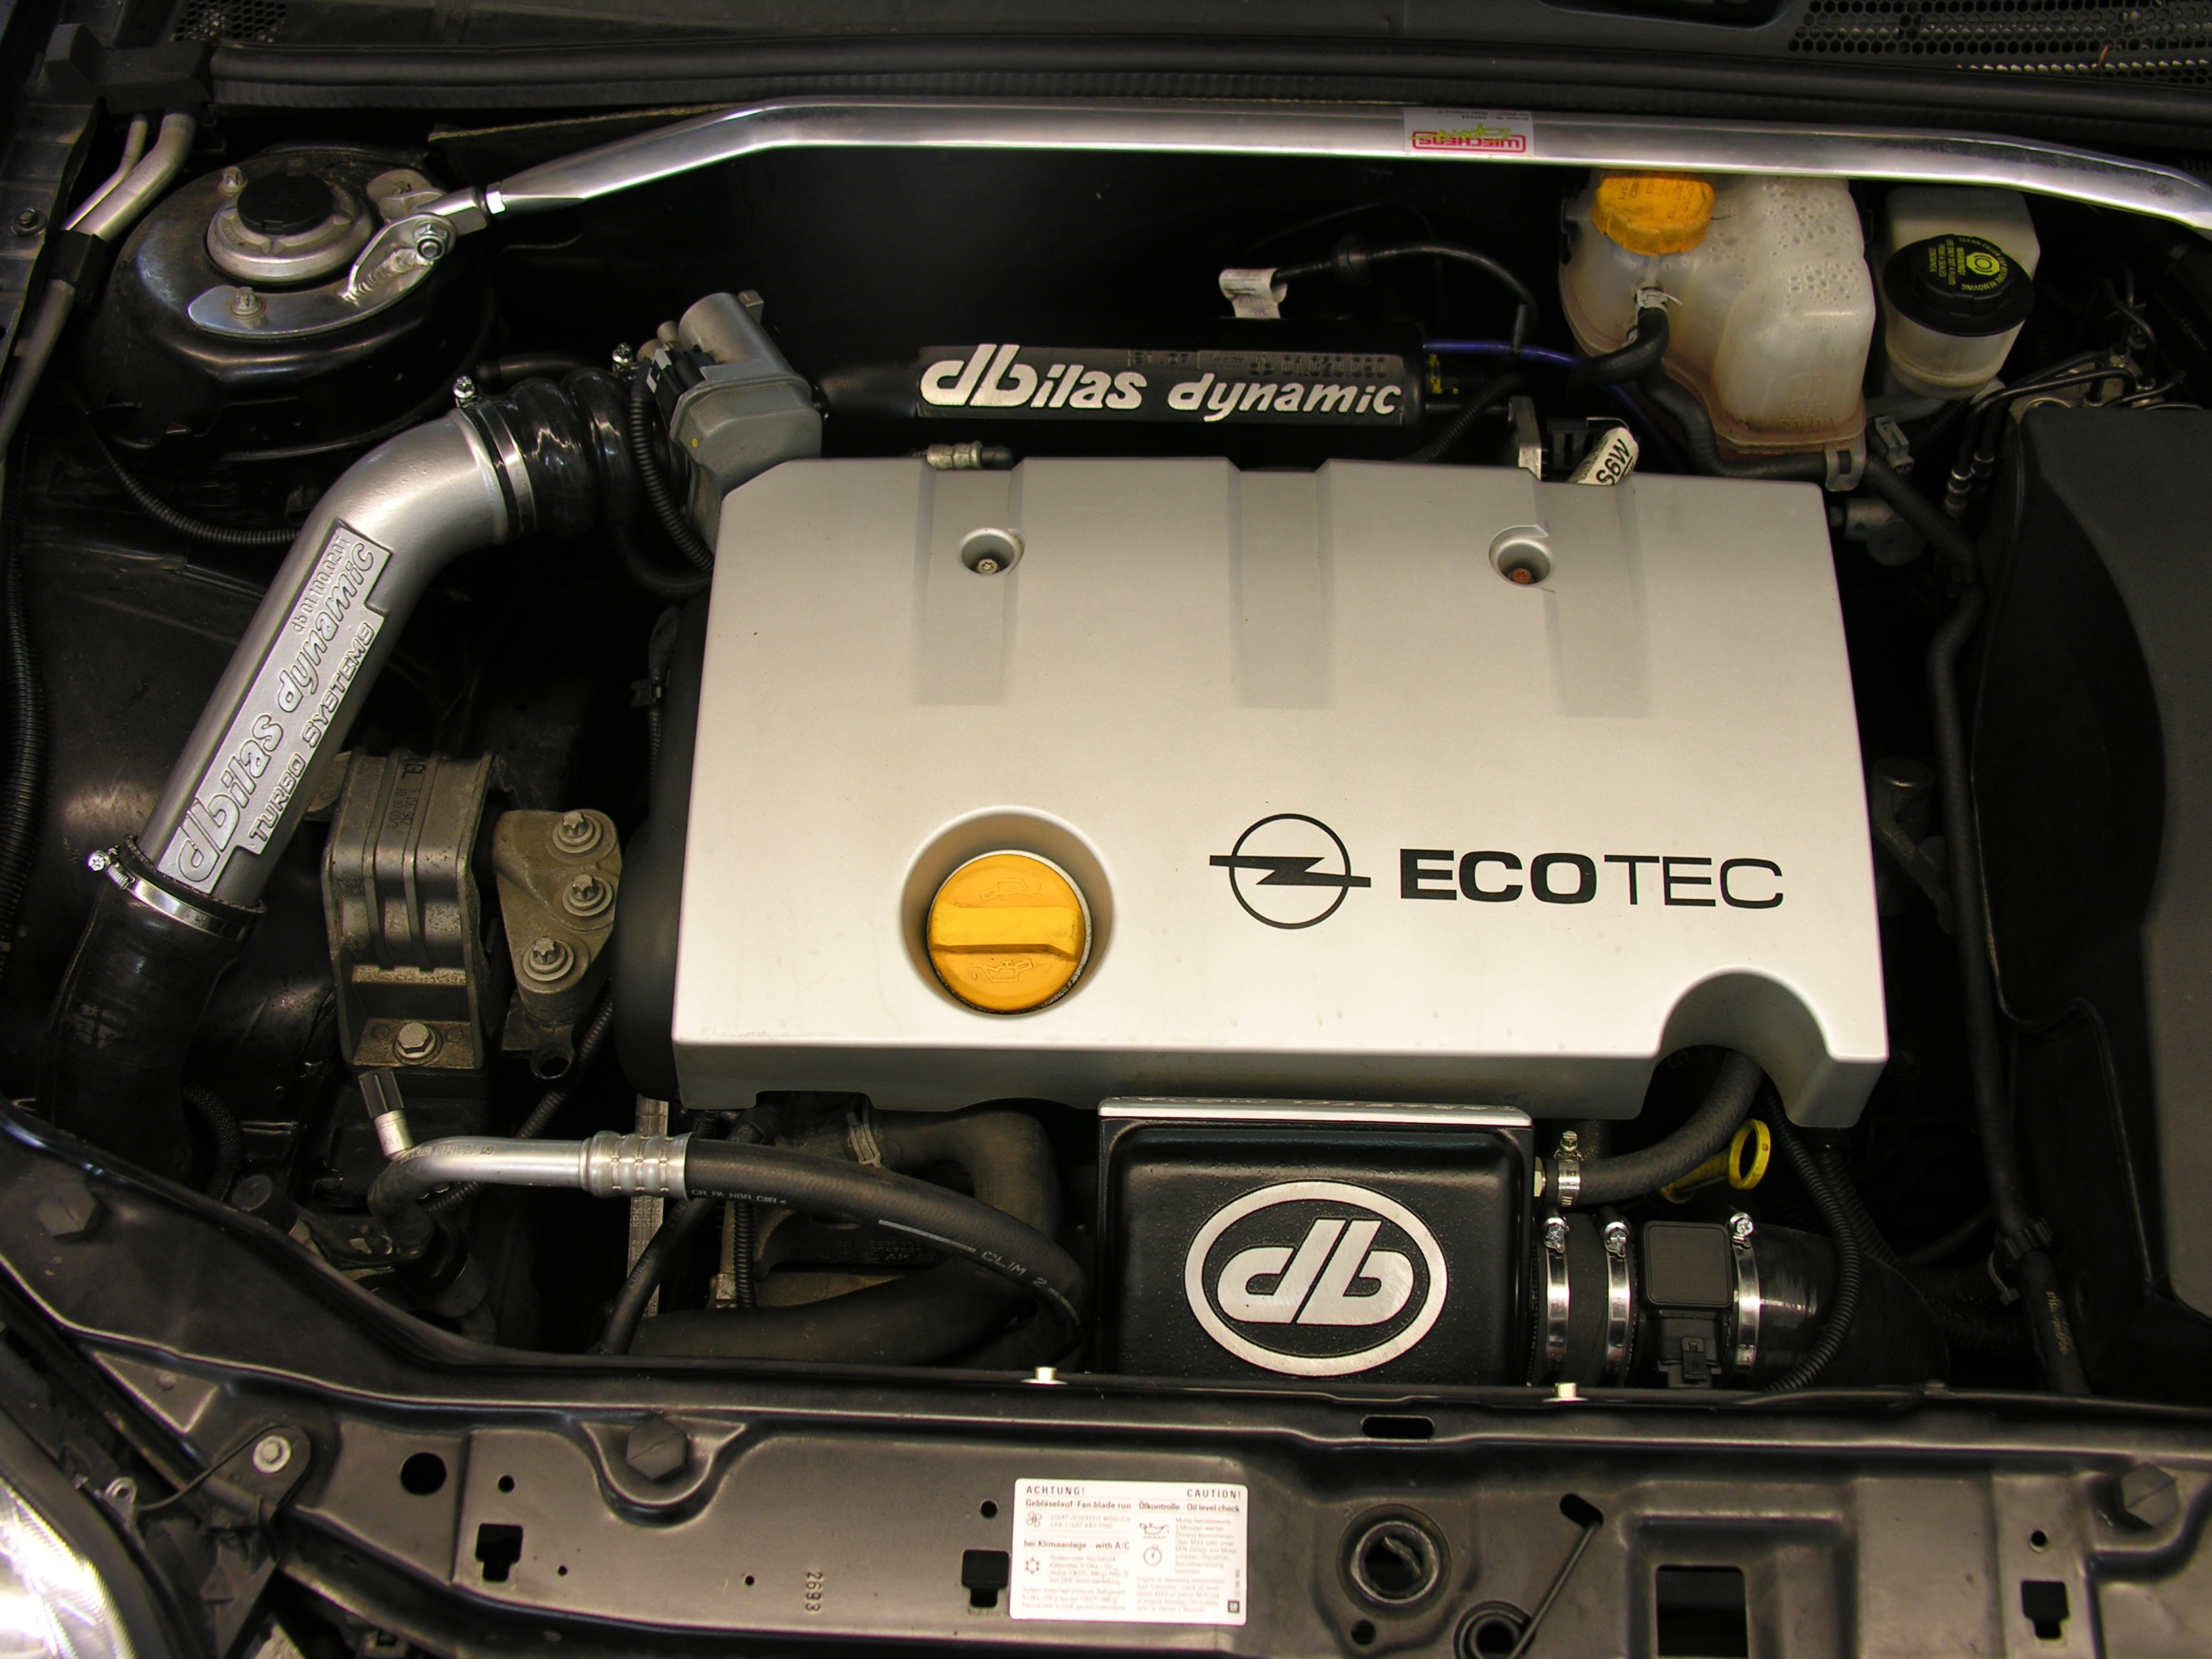 Turbocharger system Maxi Edition Opel Astra G & H, Corsa C, Signum, Tigra B, Meriva A, Vectra B & C, Zafira A Z18XE